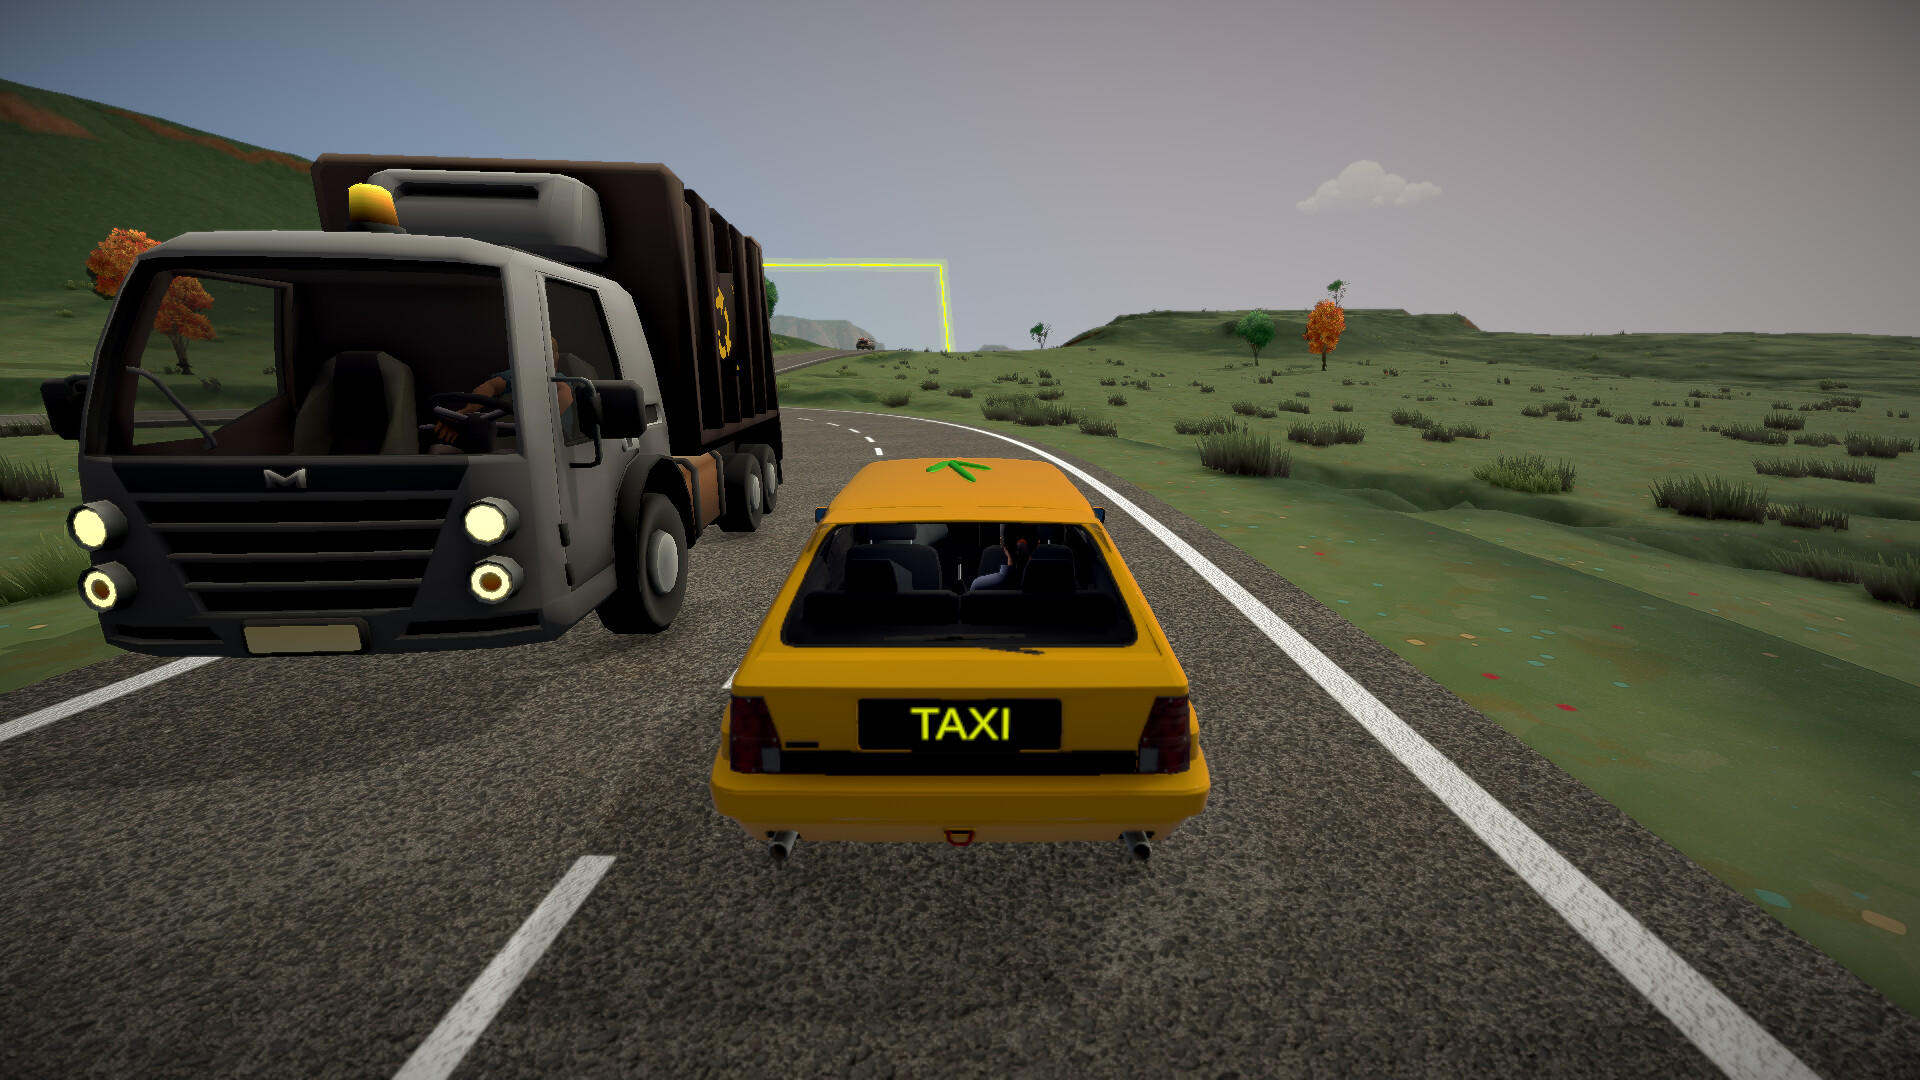 Screenshot 1 of แท็กซี่ แท็กซี่ แท็กซี่ 